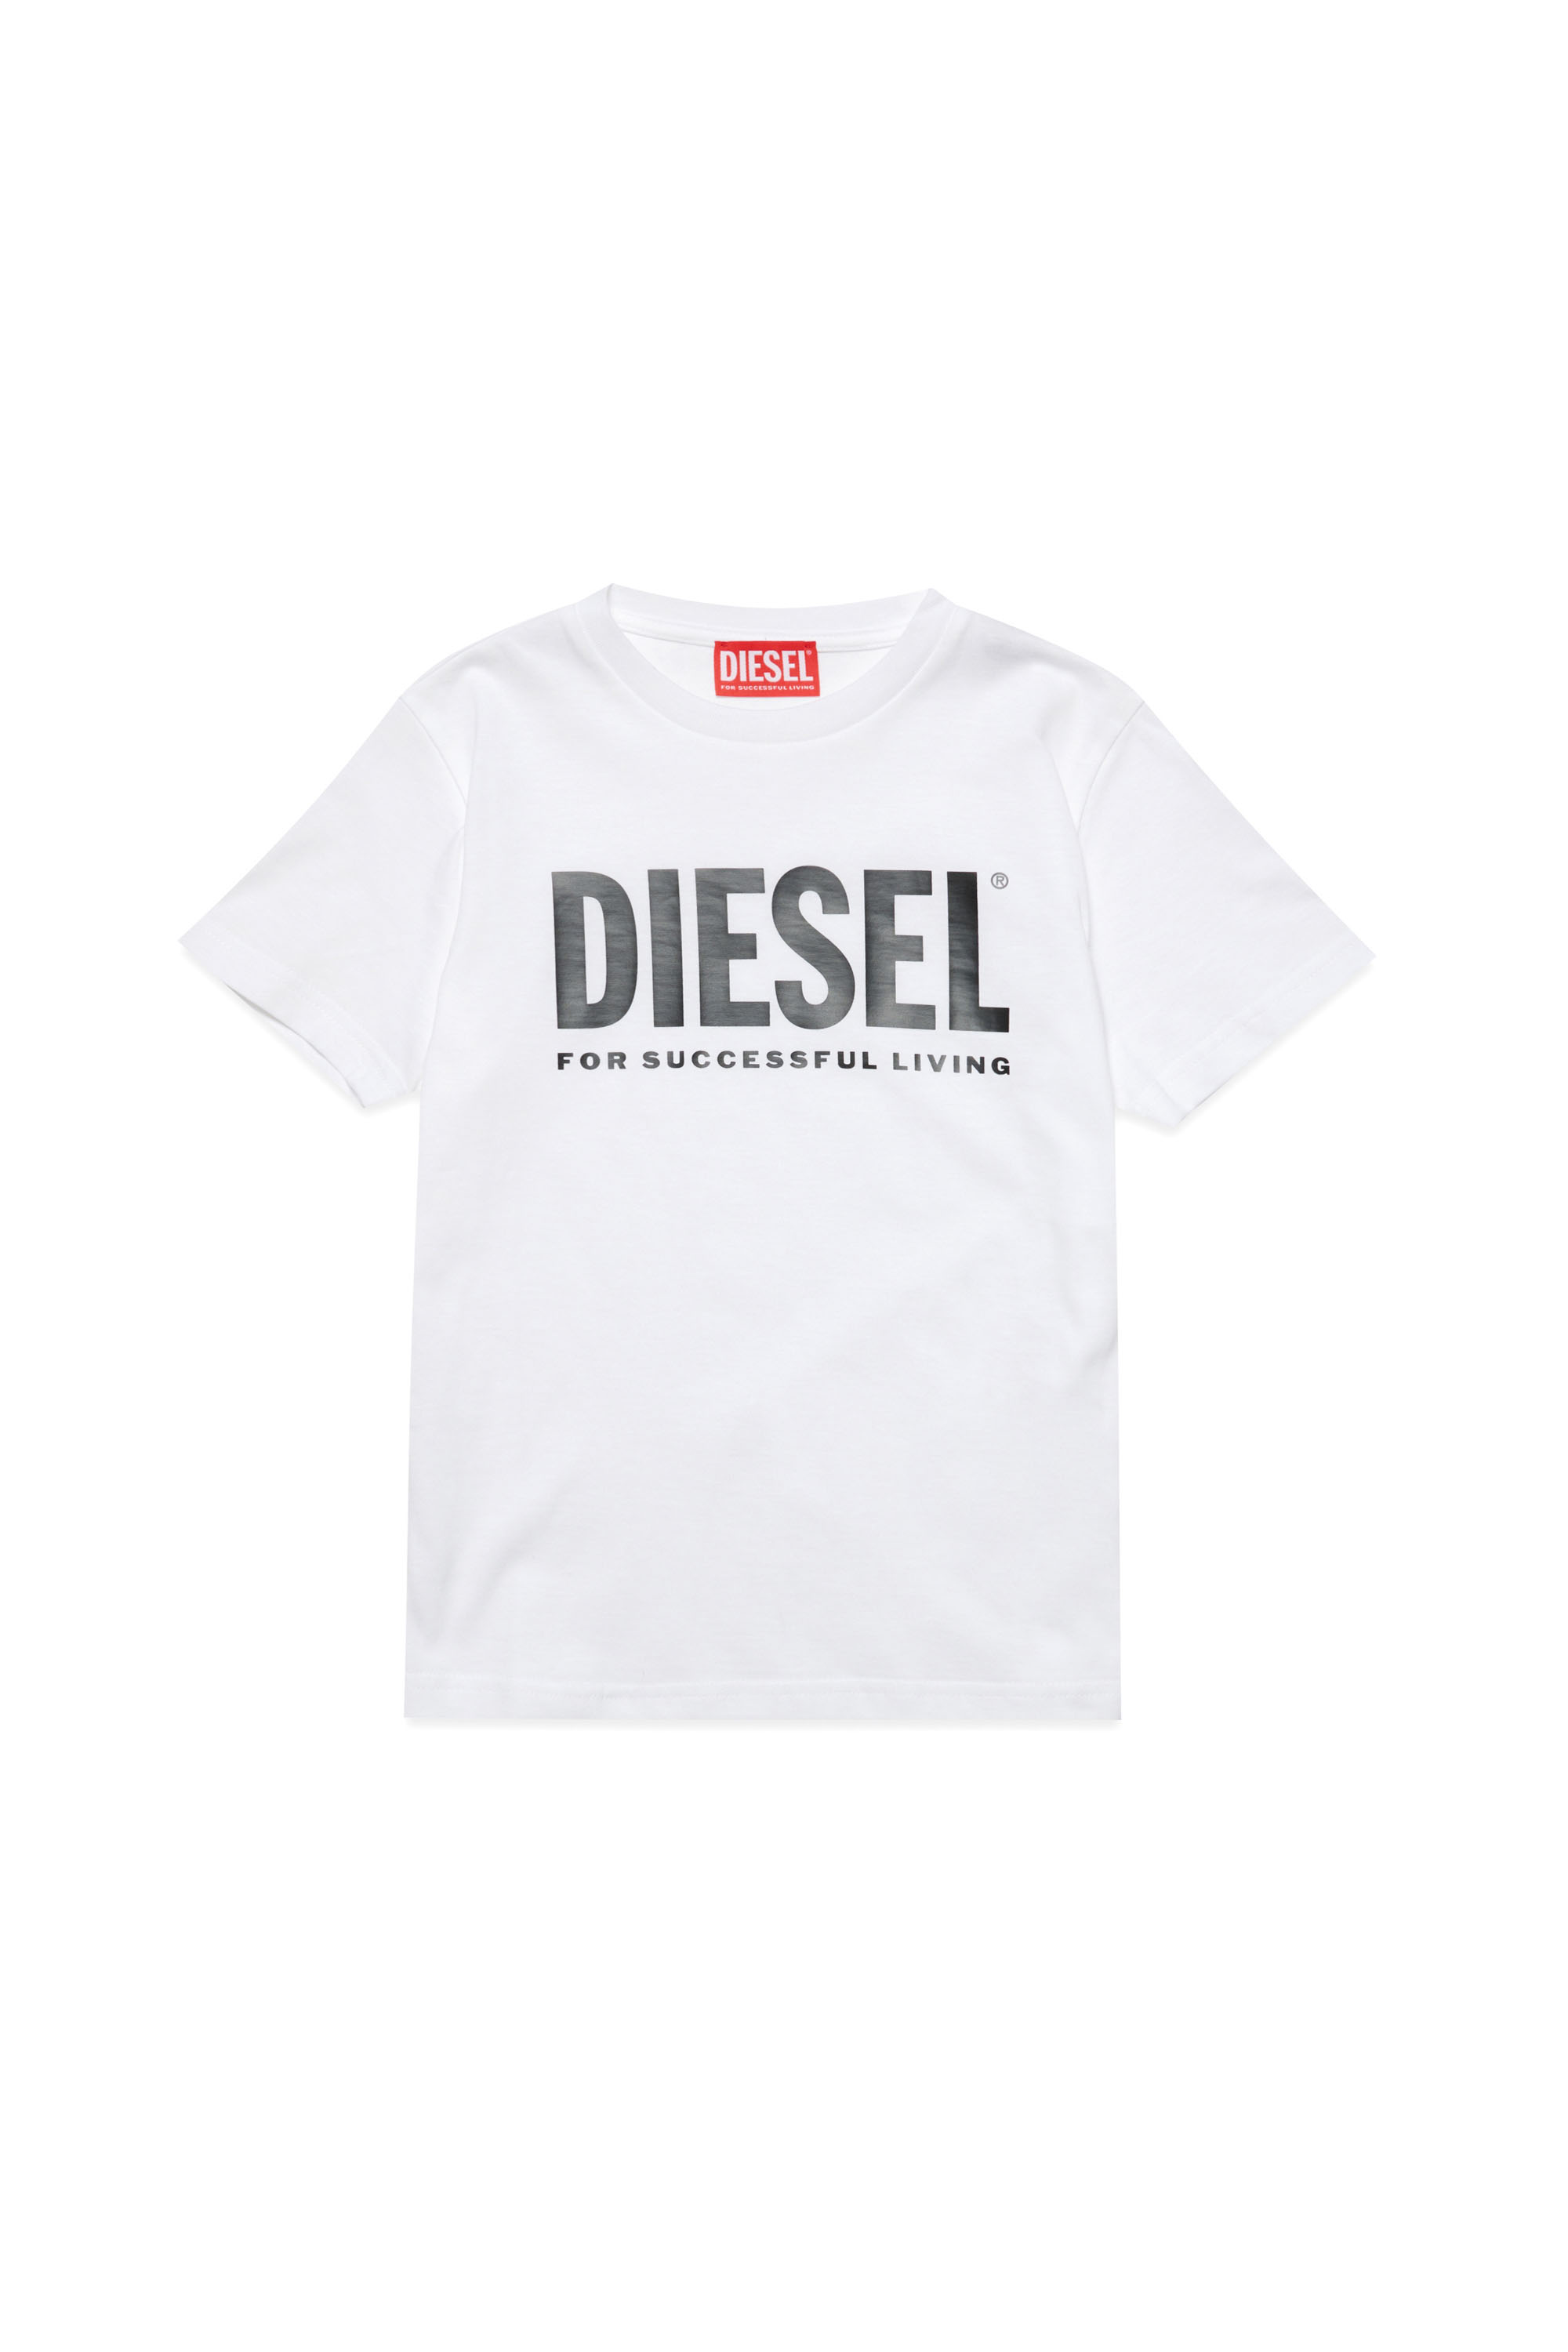 Diesel - LTGIM DI, White - Image 1